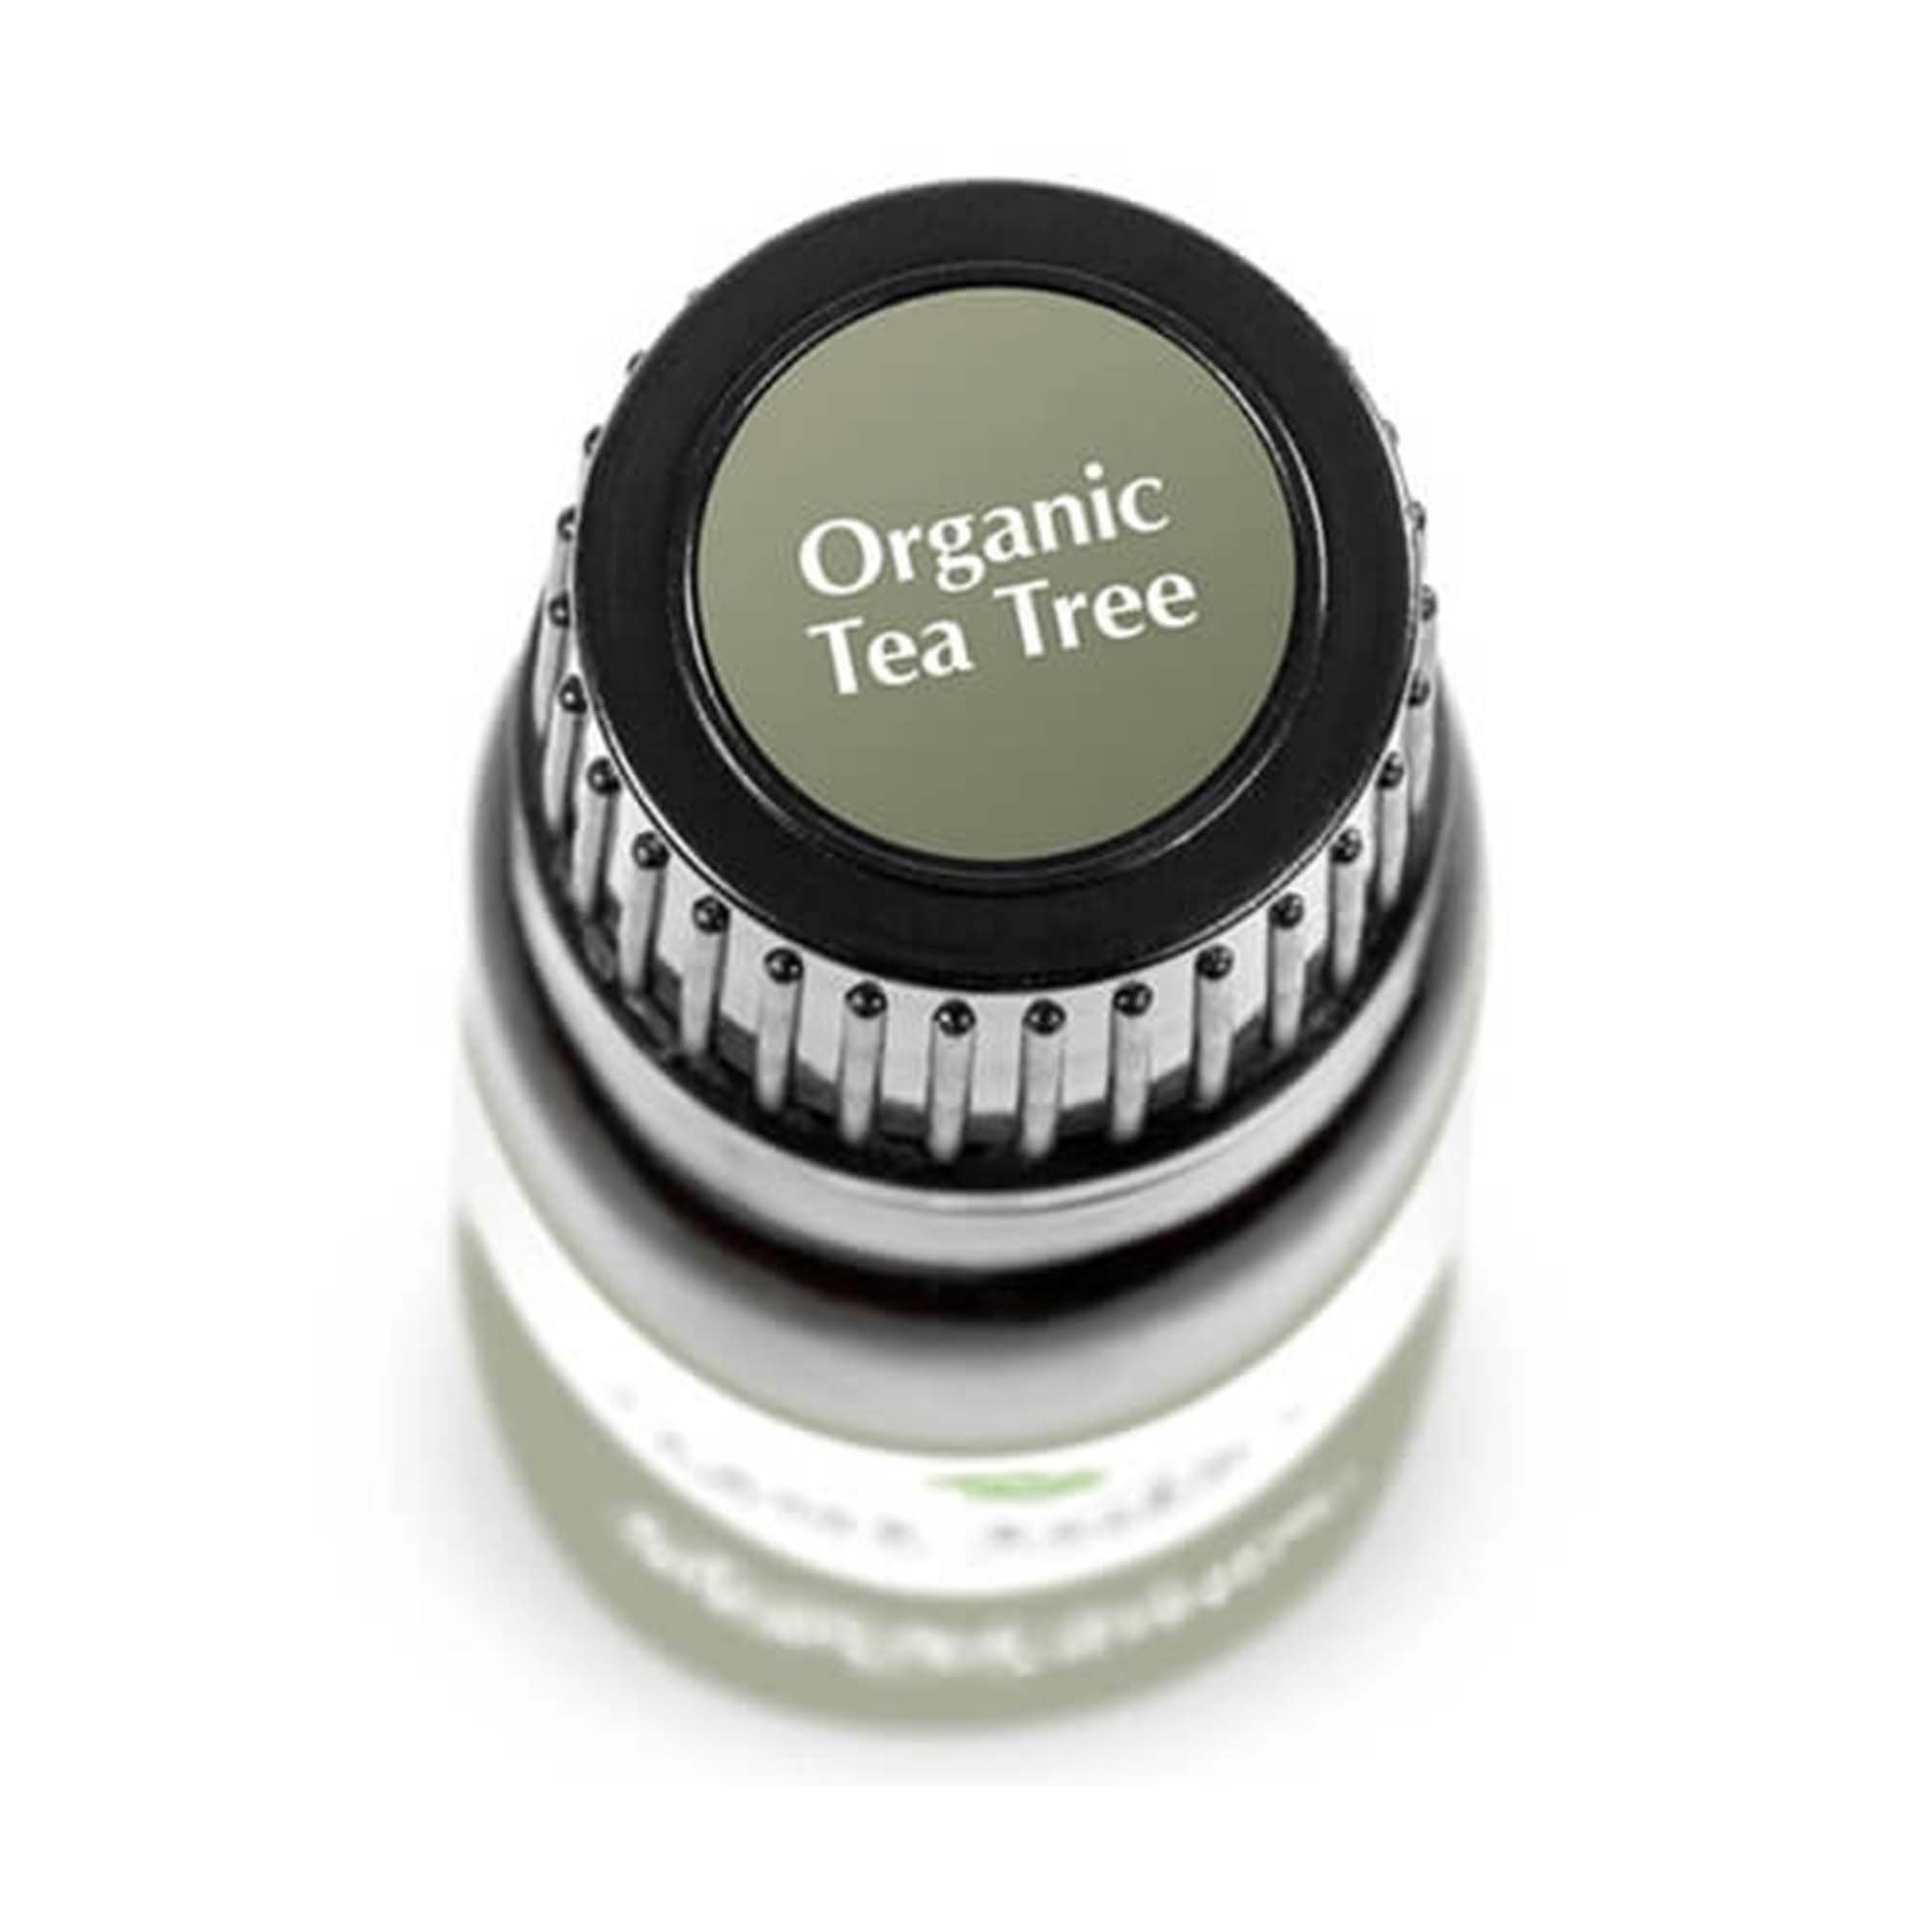 birds eye view of 10 ml black bottle with grey label. reads "organictea tree""